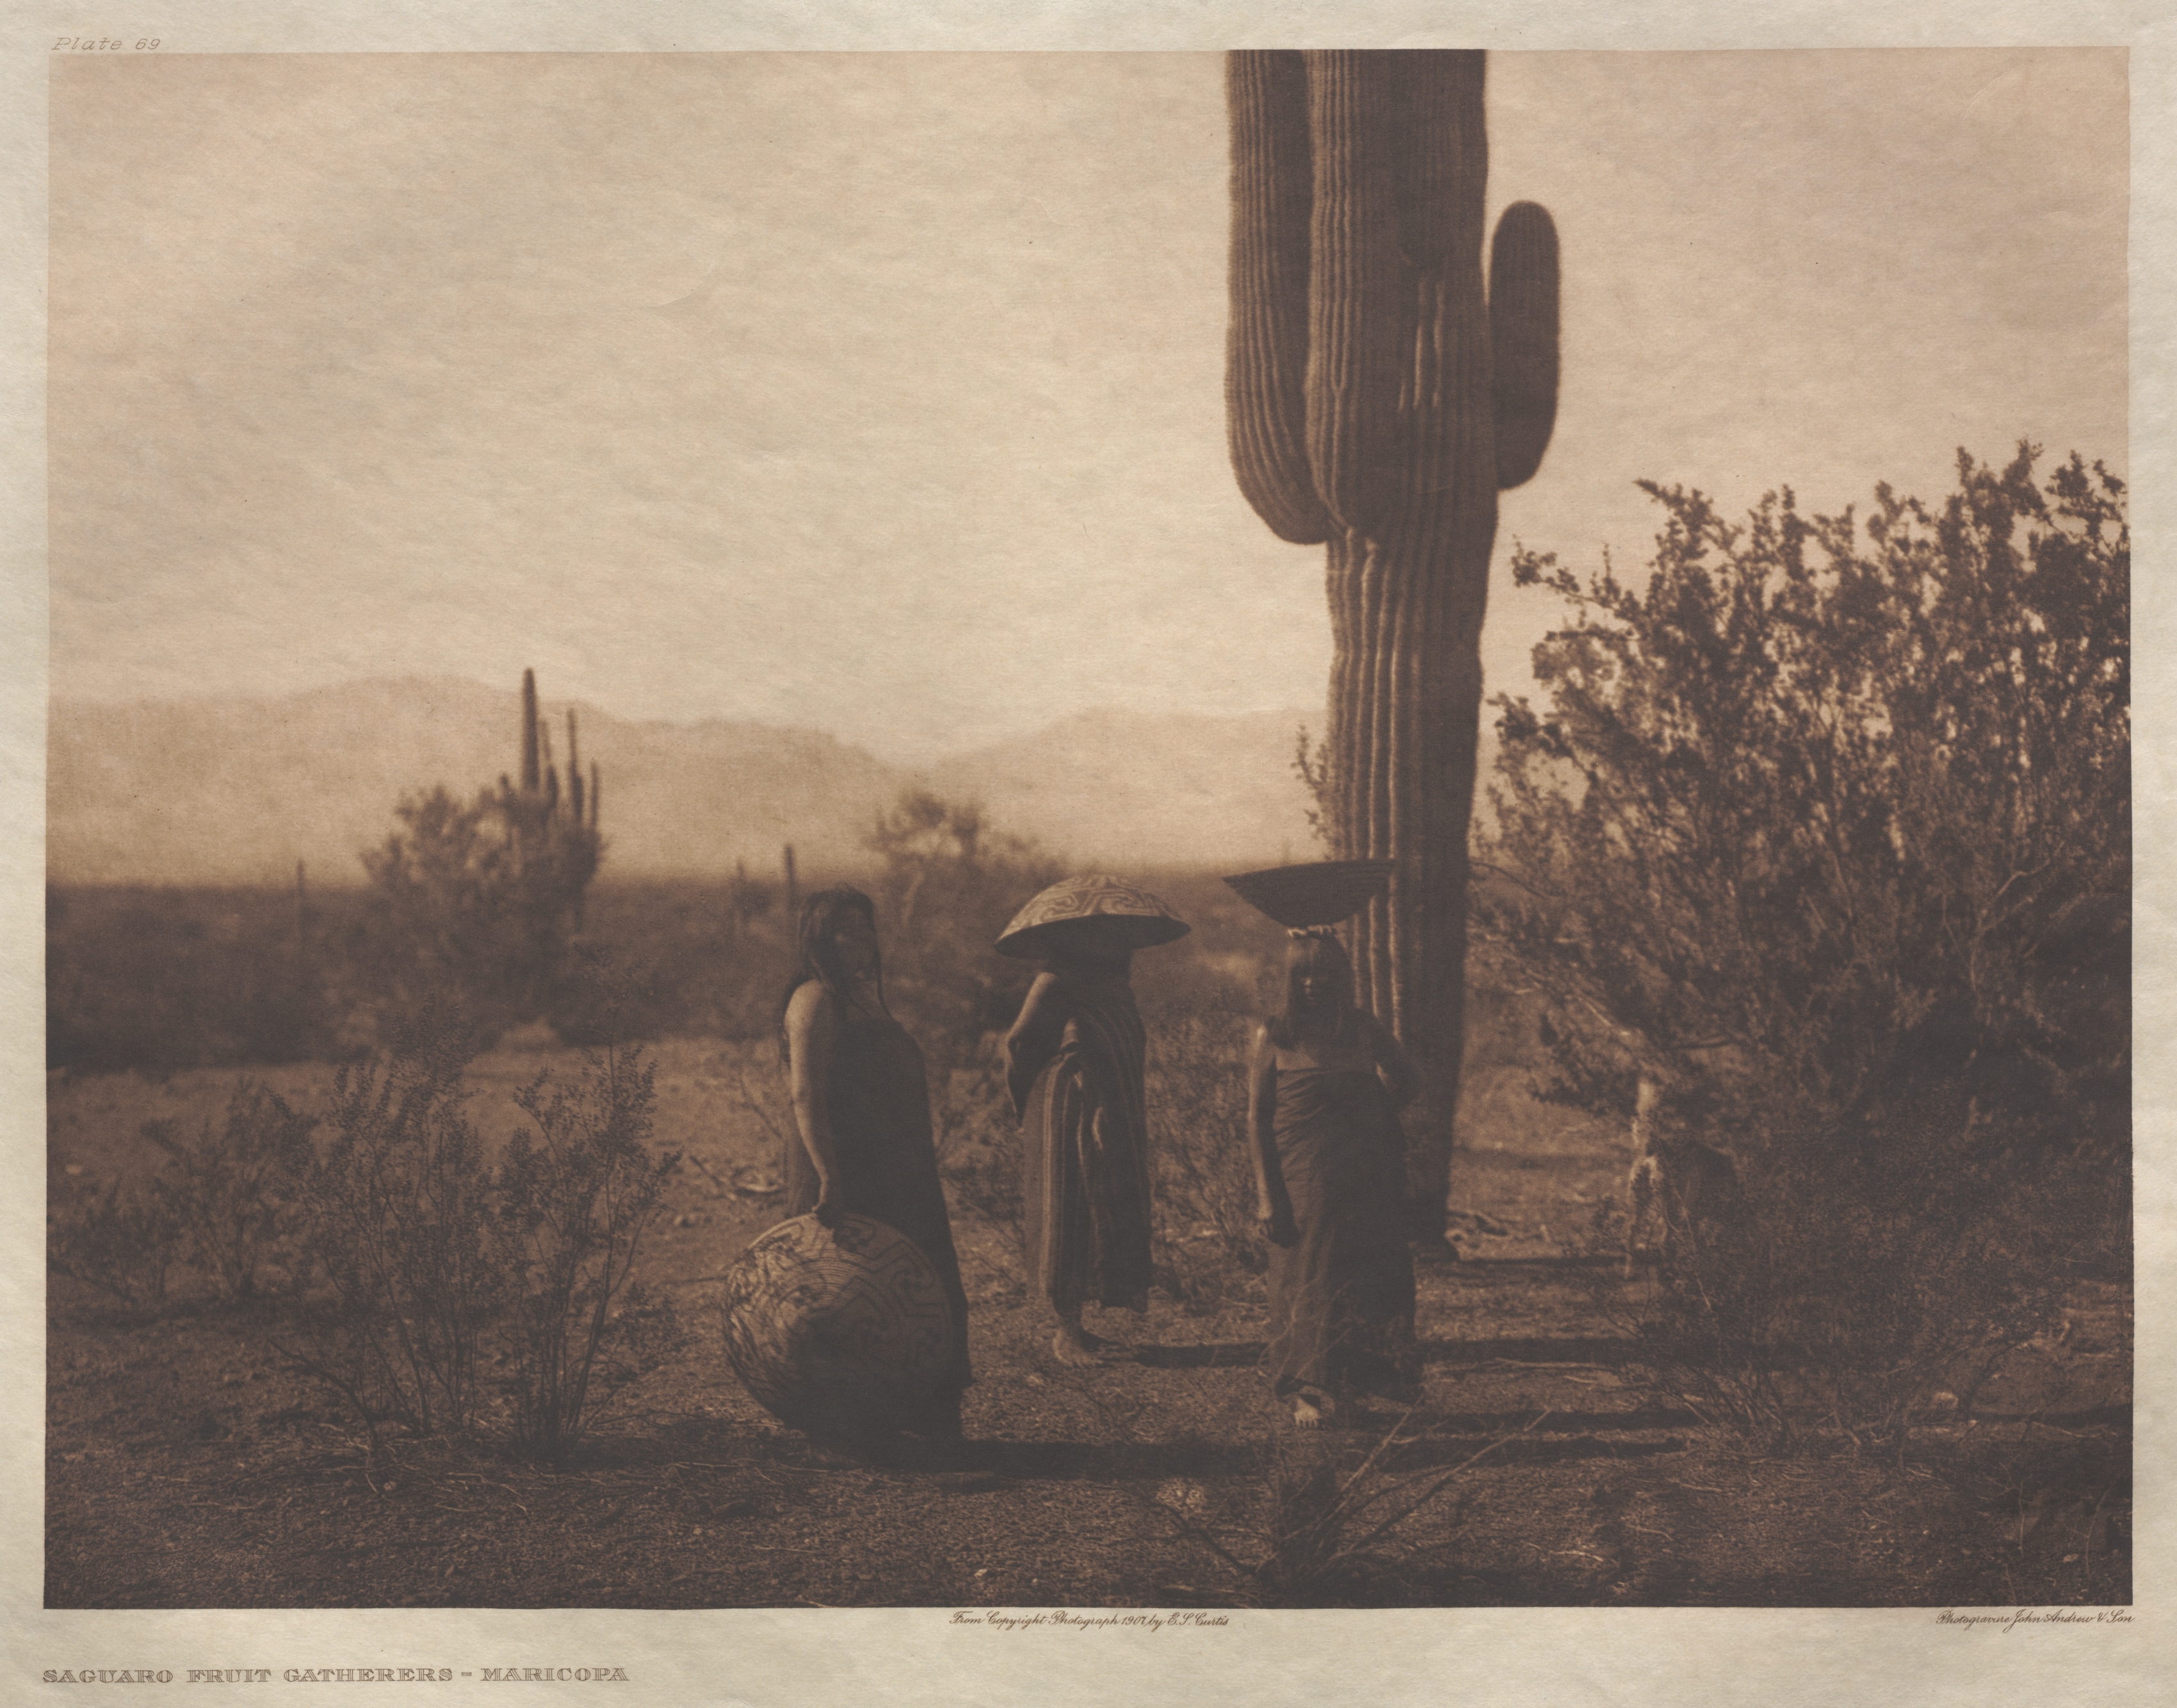 Portfolio II, Plate 69: Saguaro Fruit Gatherers-Maricopa